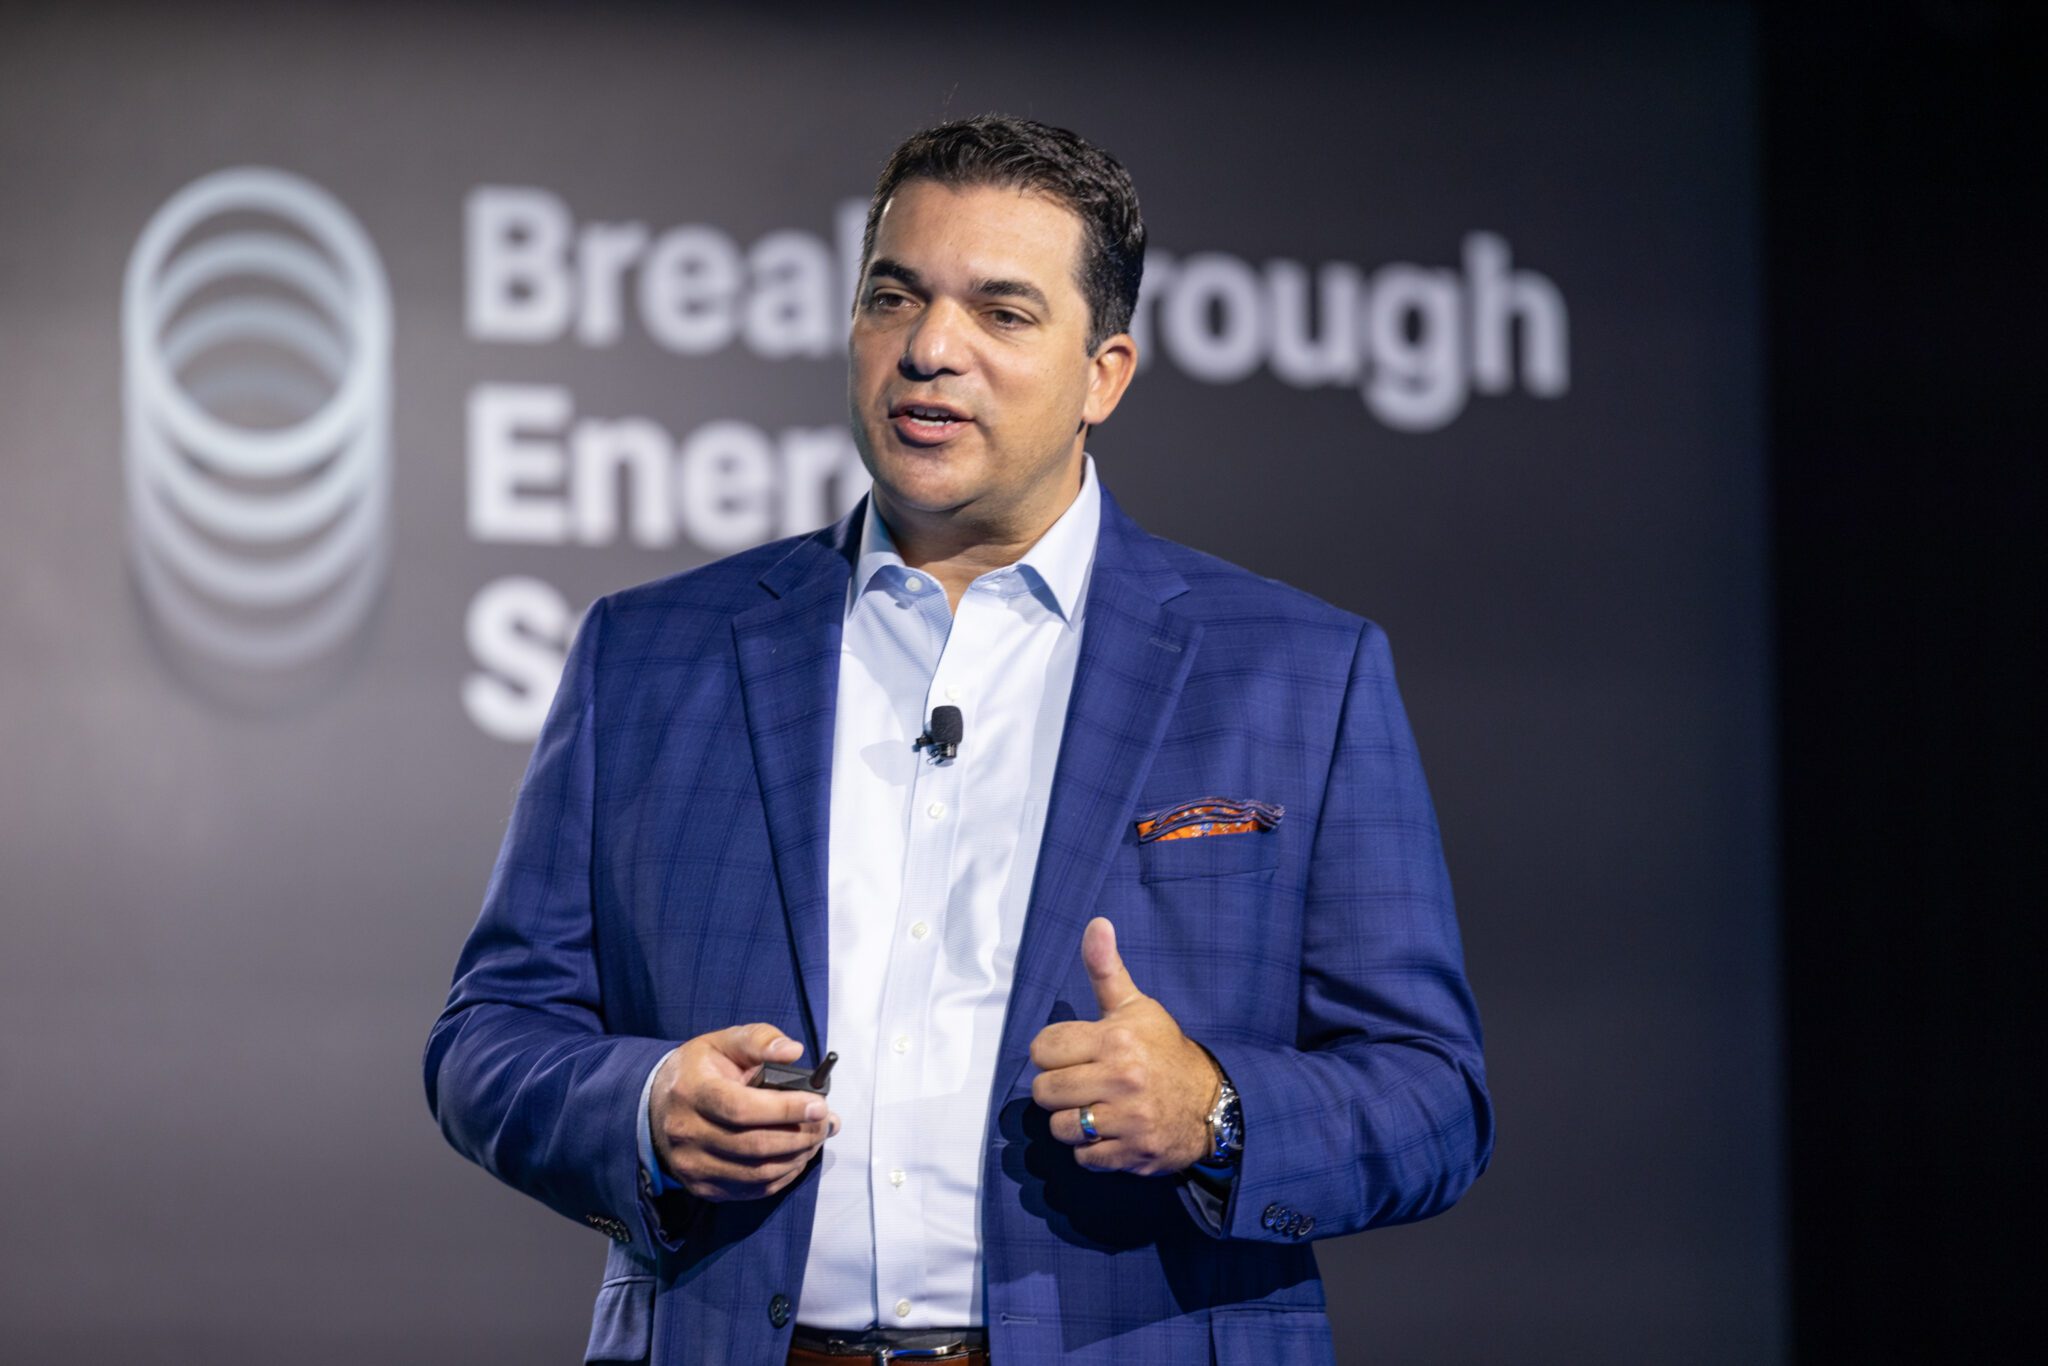 LanzaJet CEO Jimmy Samartzis on stage at the Breakthrough Energy Summit